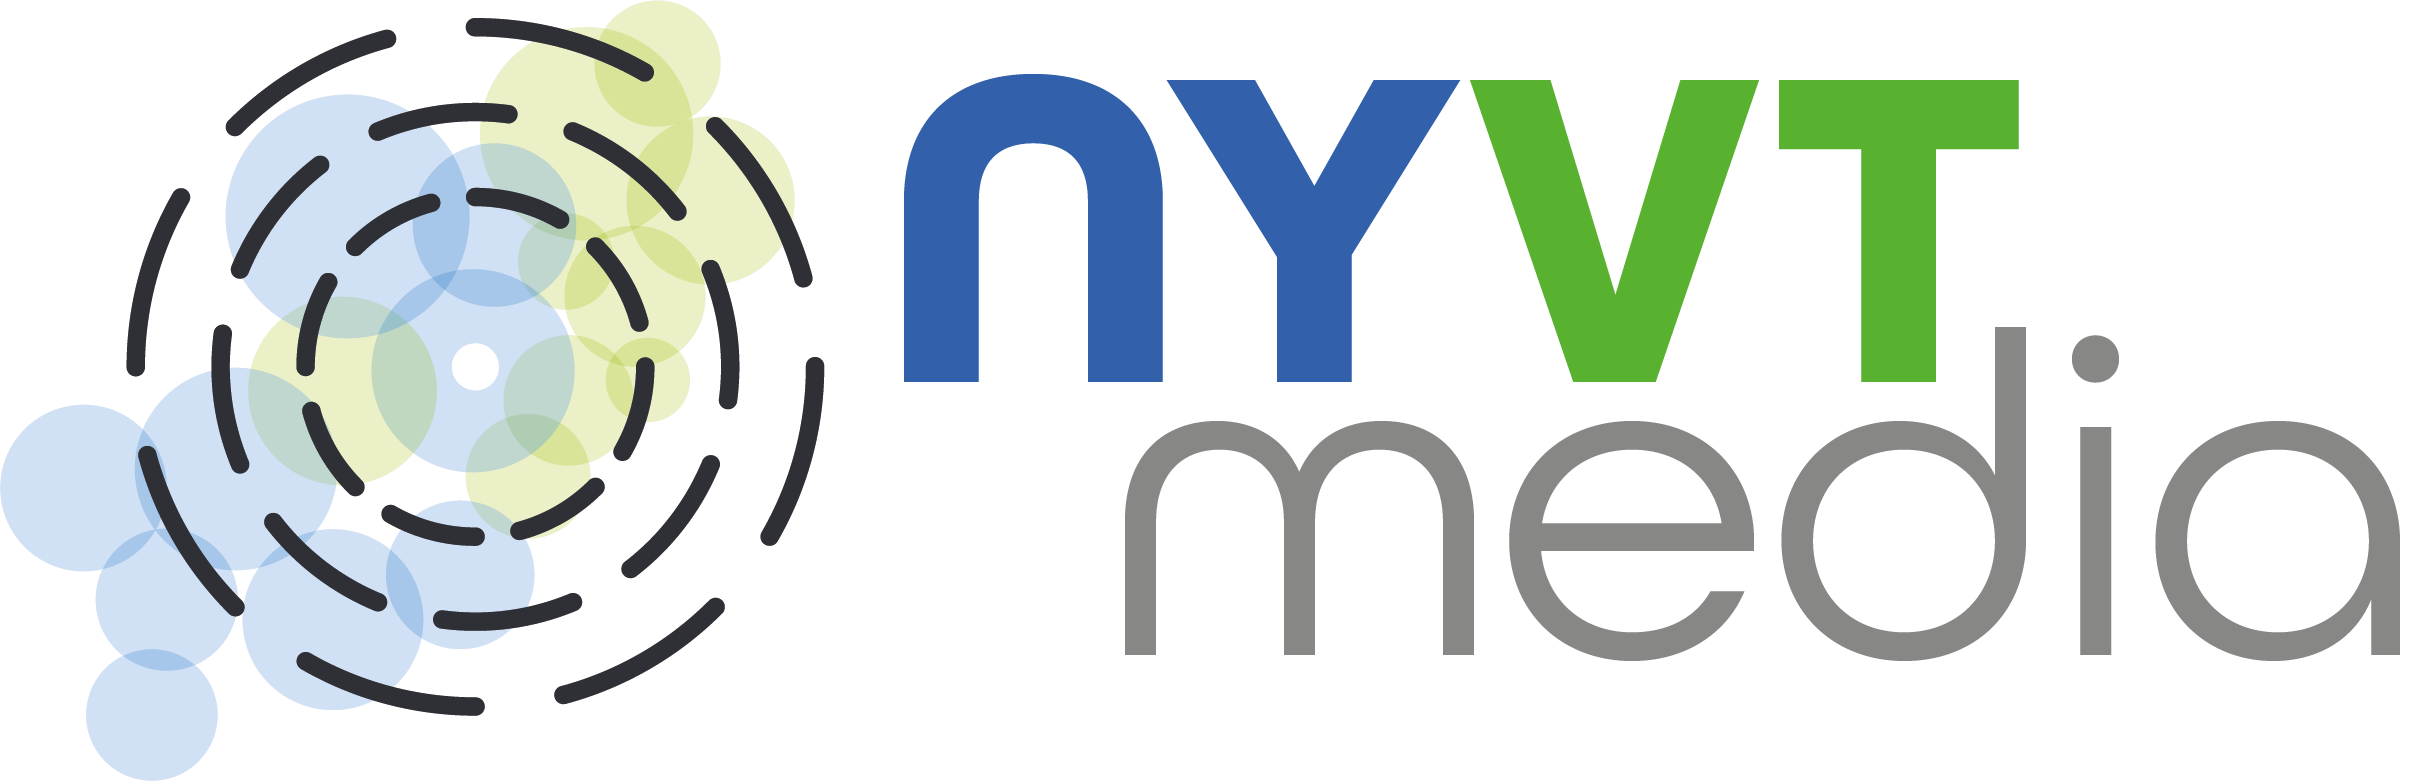 NYVT Media